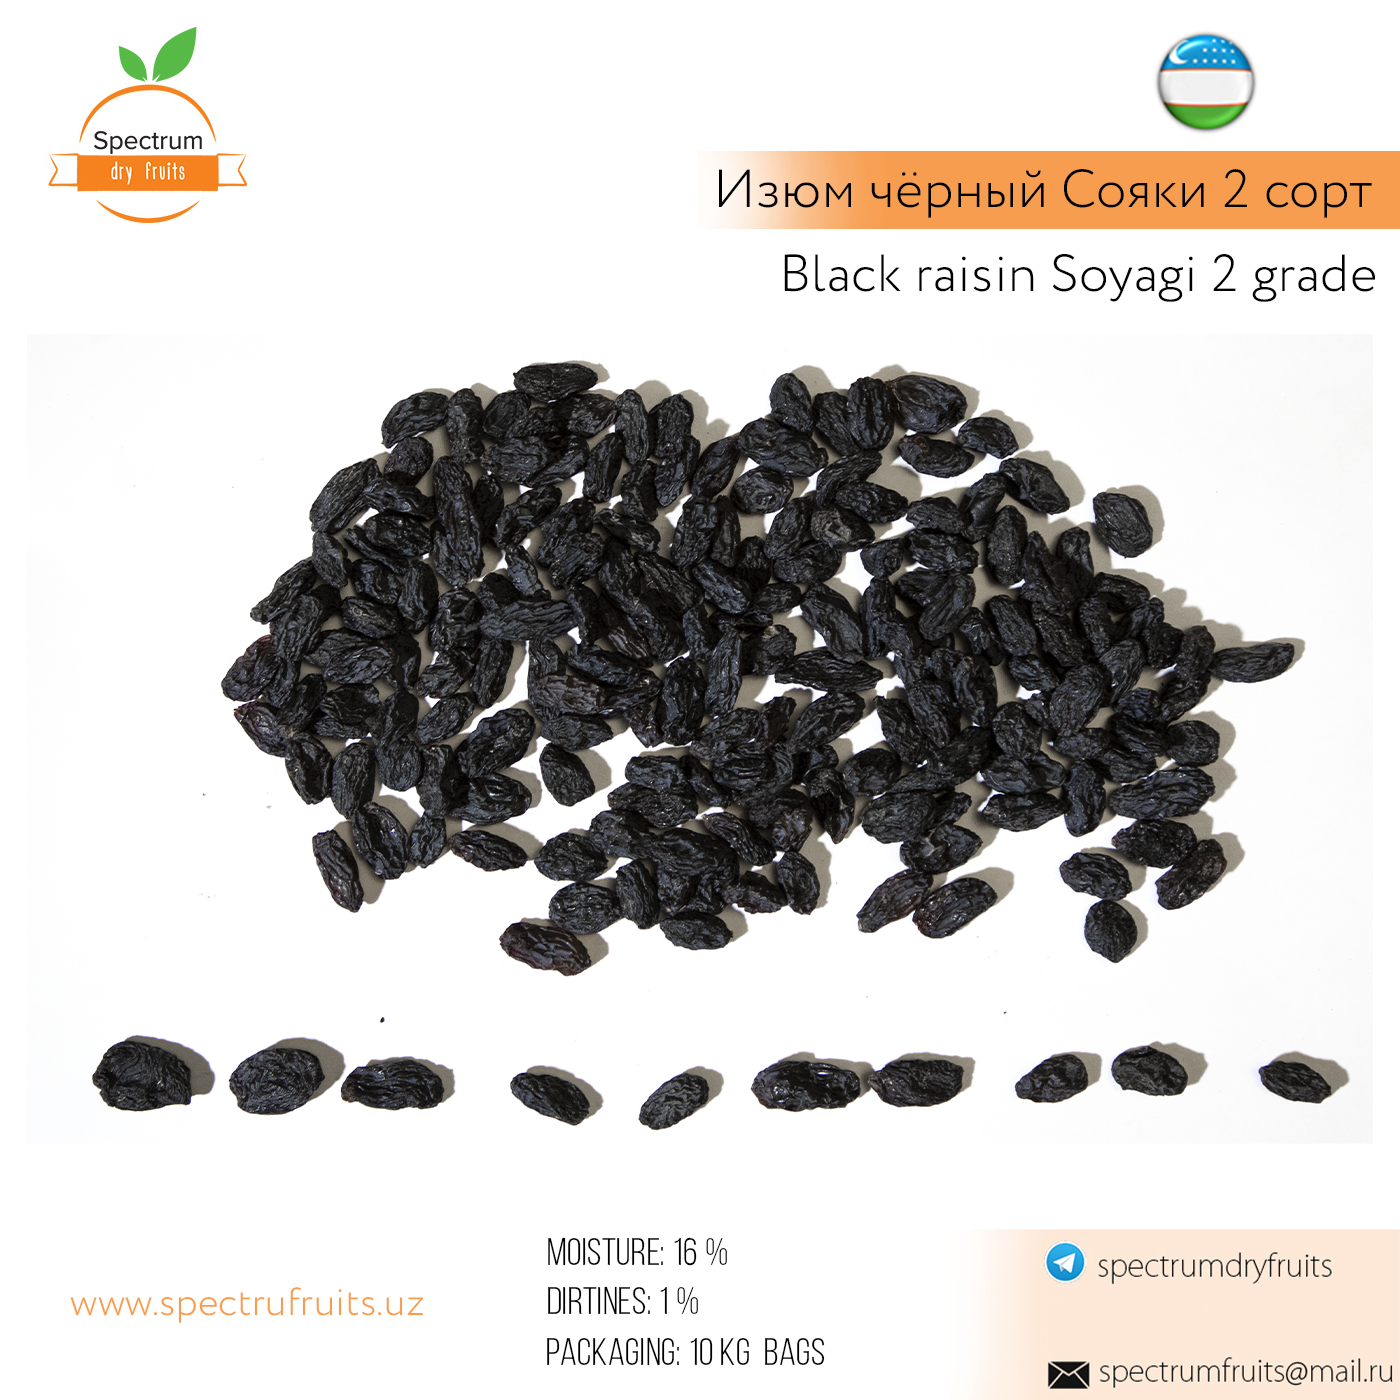 Raisins Black Soyagi 2nd grade